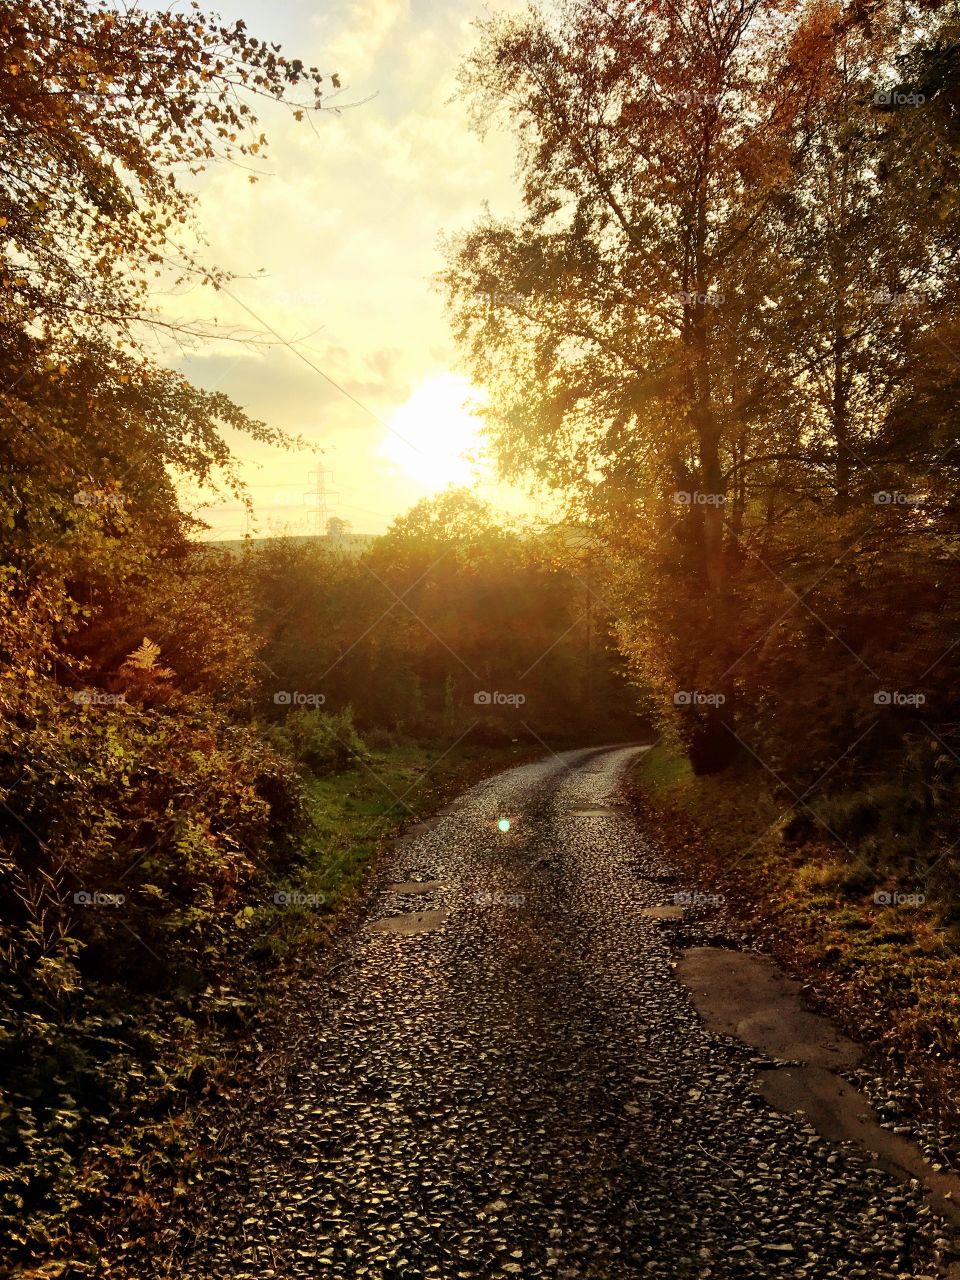 Autumn stroll down countryside lane